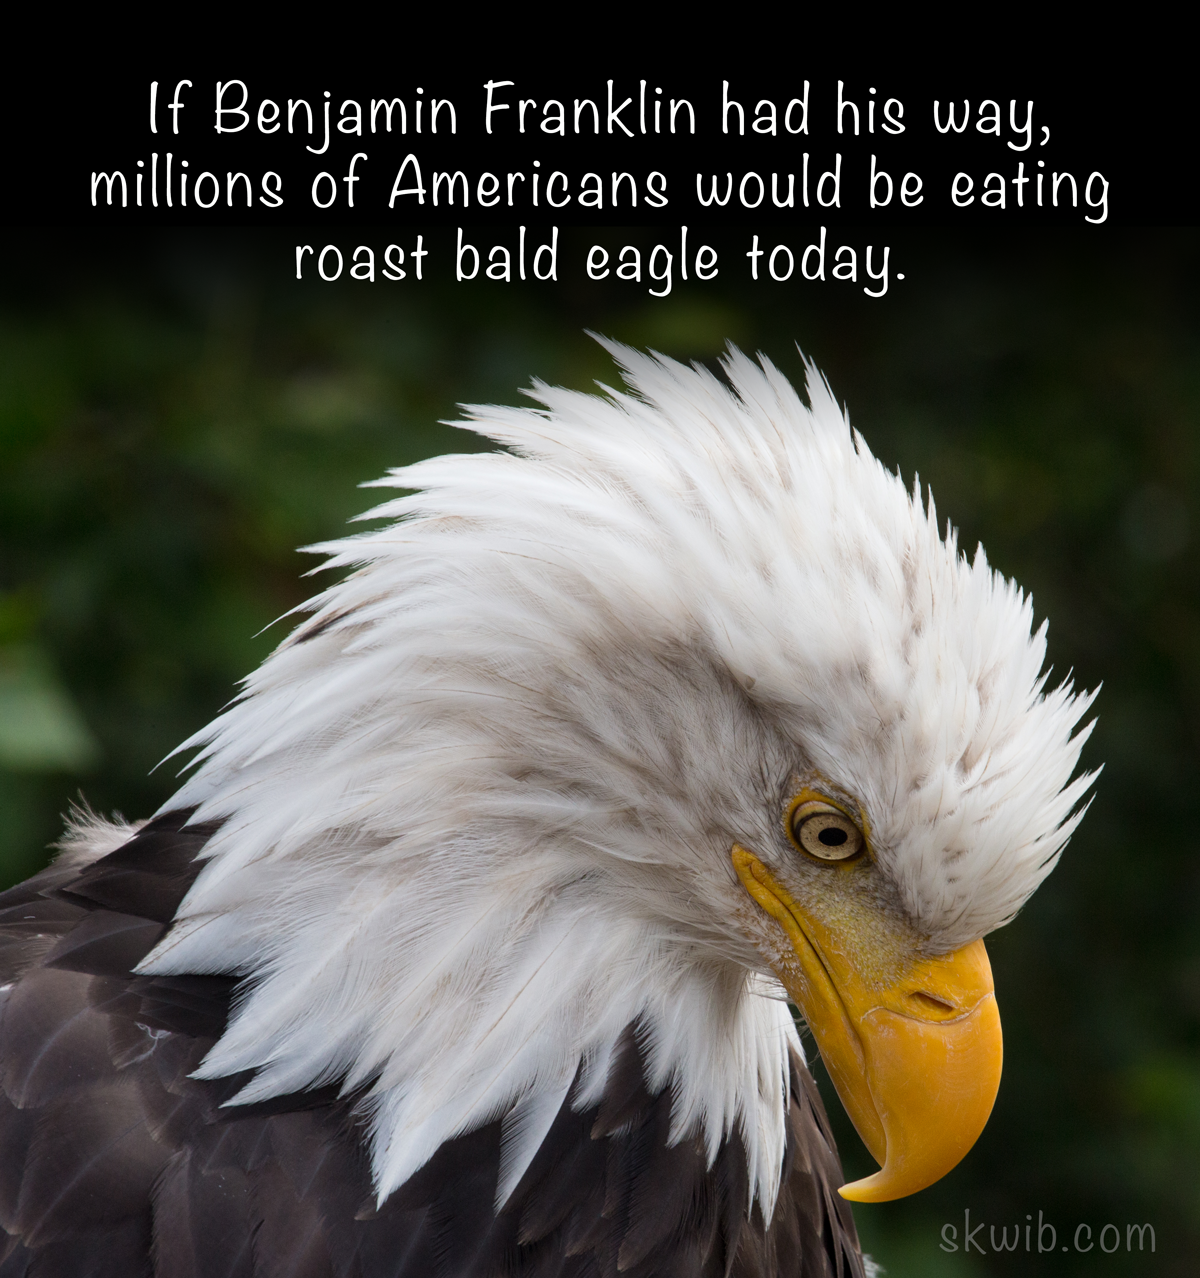 bald eagle with caption